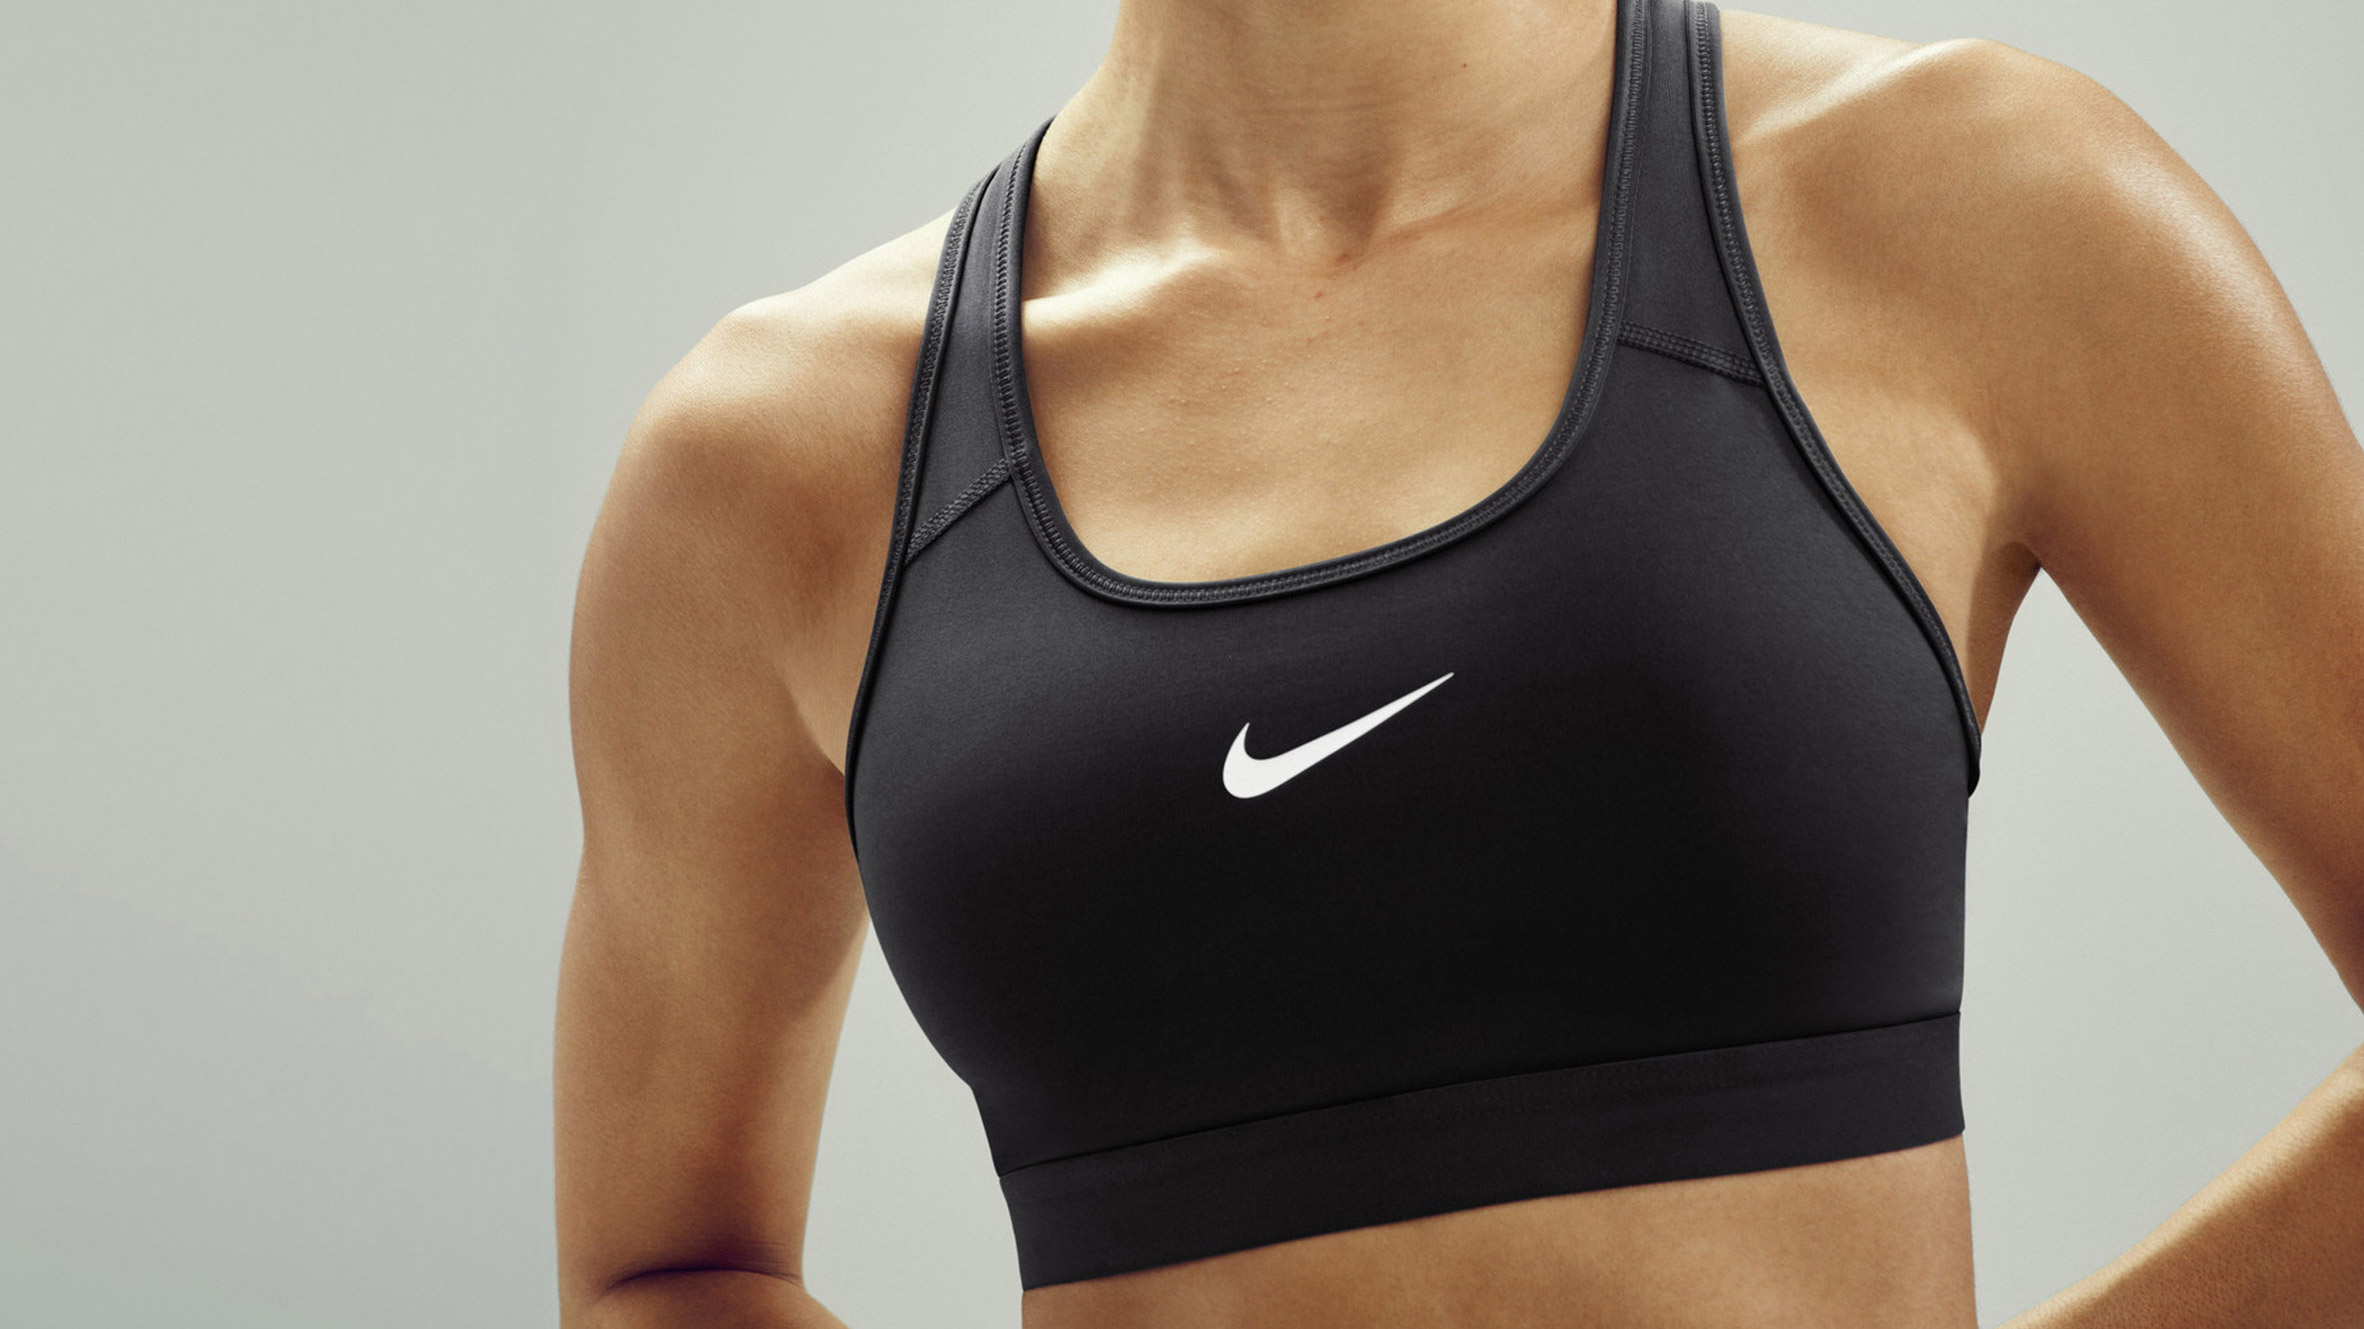 Nike - Nike Sports Bra on Designer Wardrobe